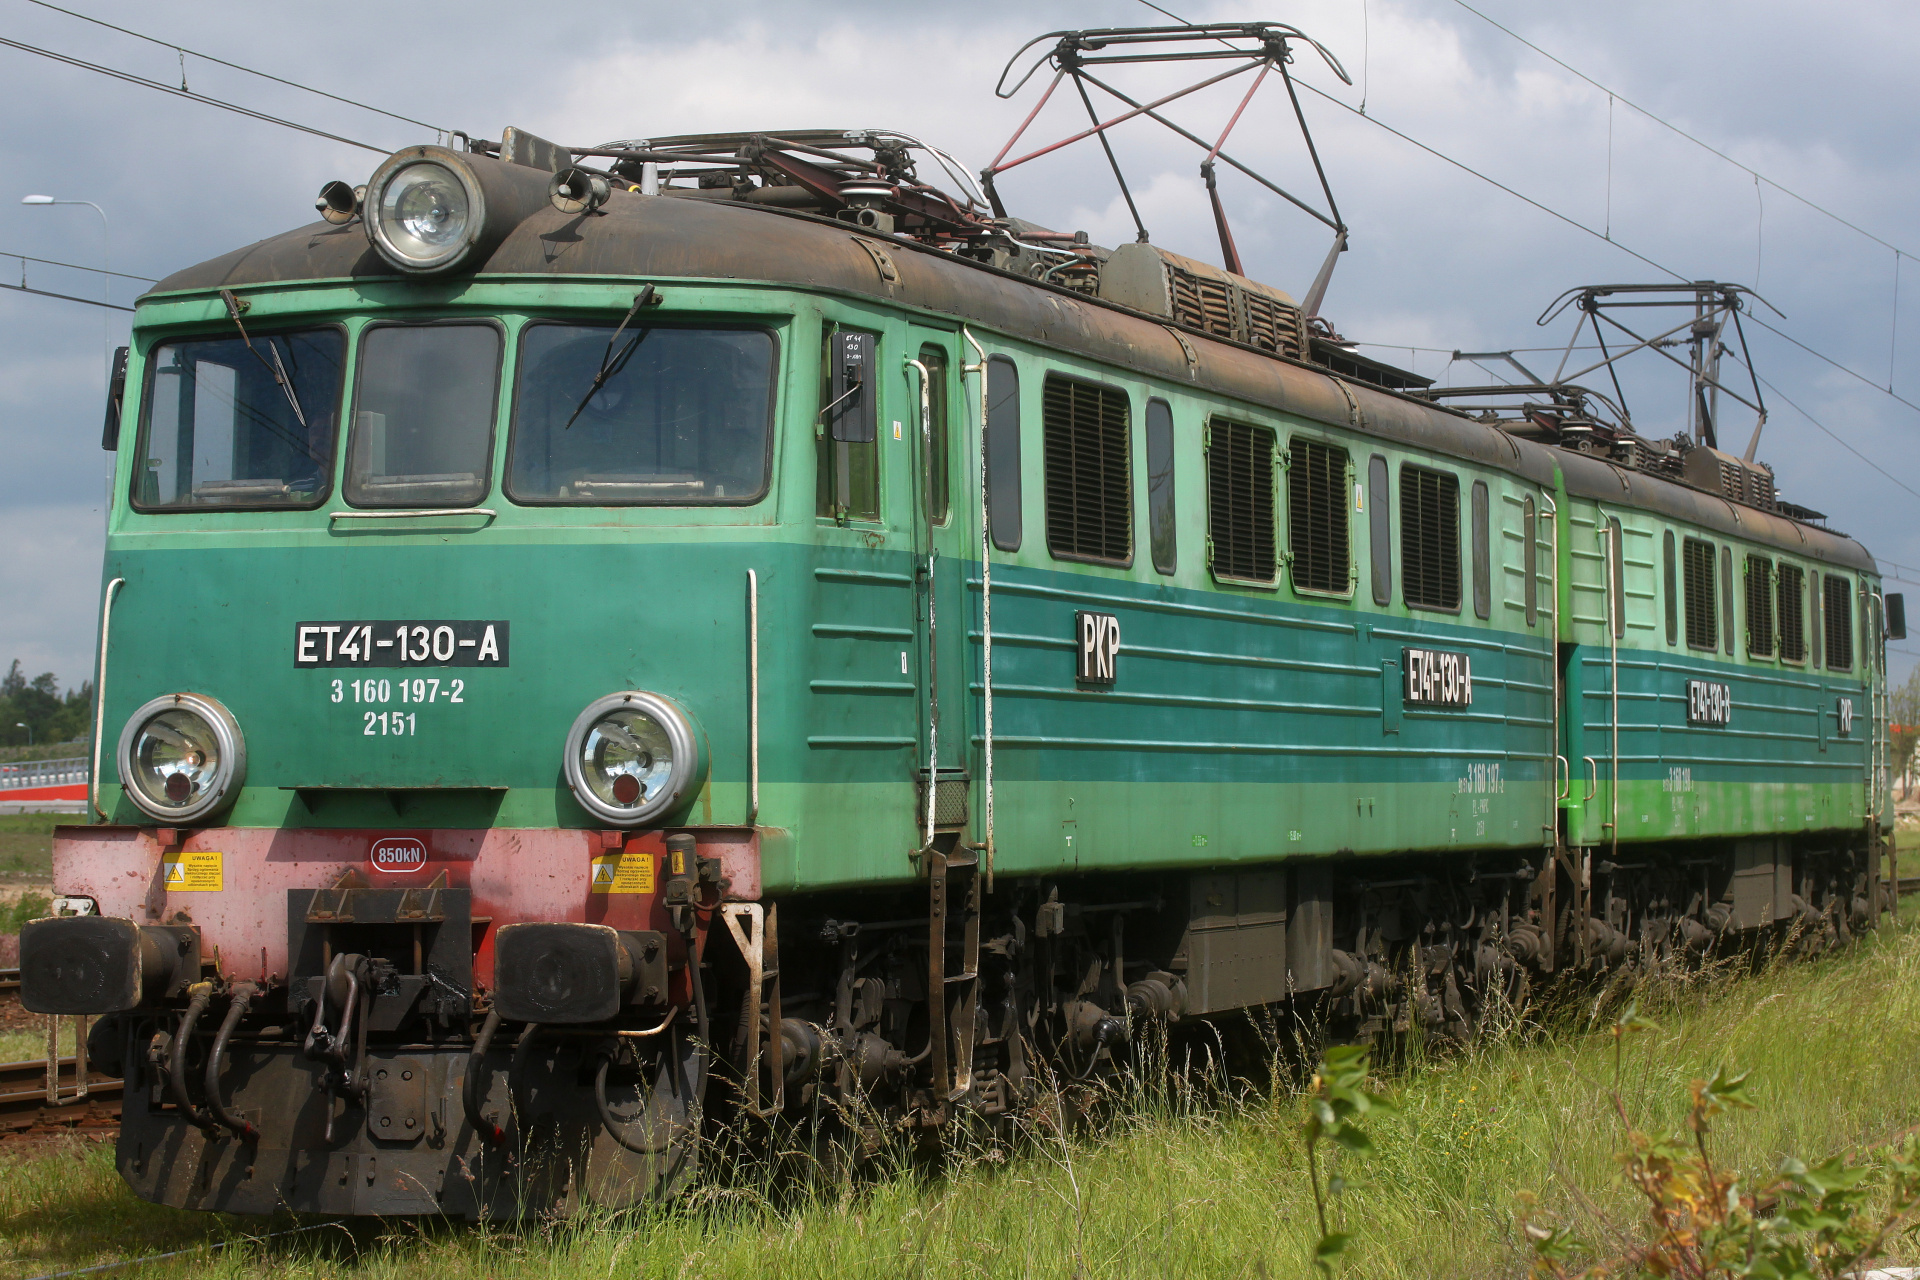 HCP 203E ET41-130 (Vehicles » Trains and Locomotives)